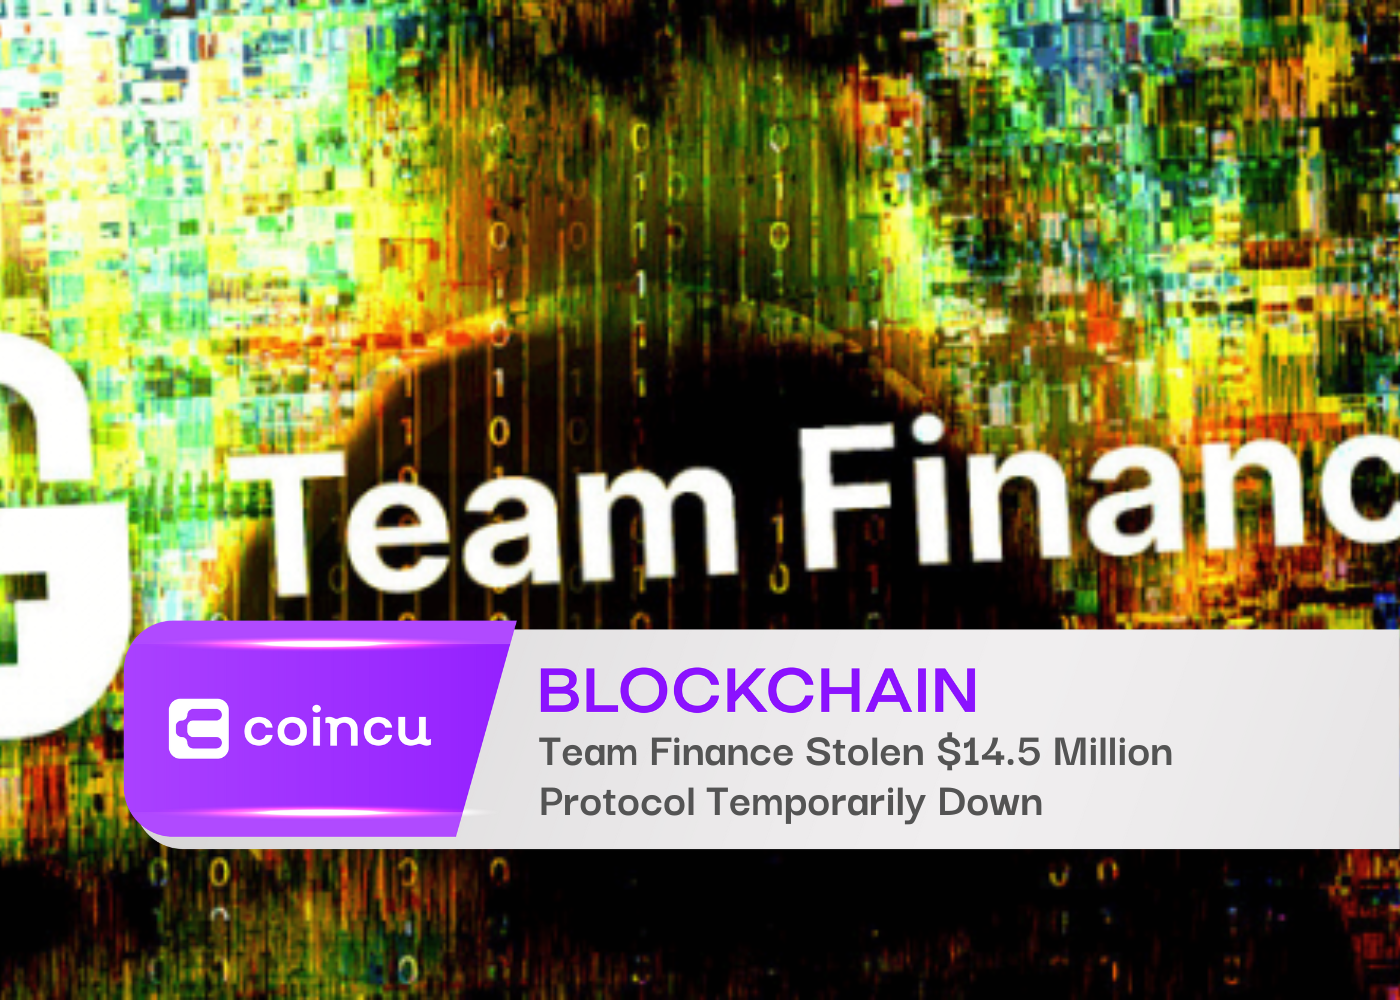 Team Finance Stolen $14.5 Million, Protocol Temporarily Down